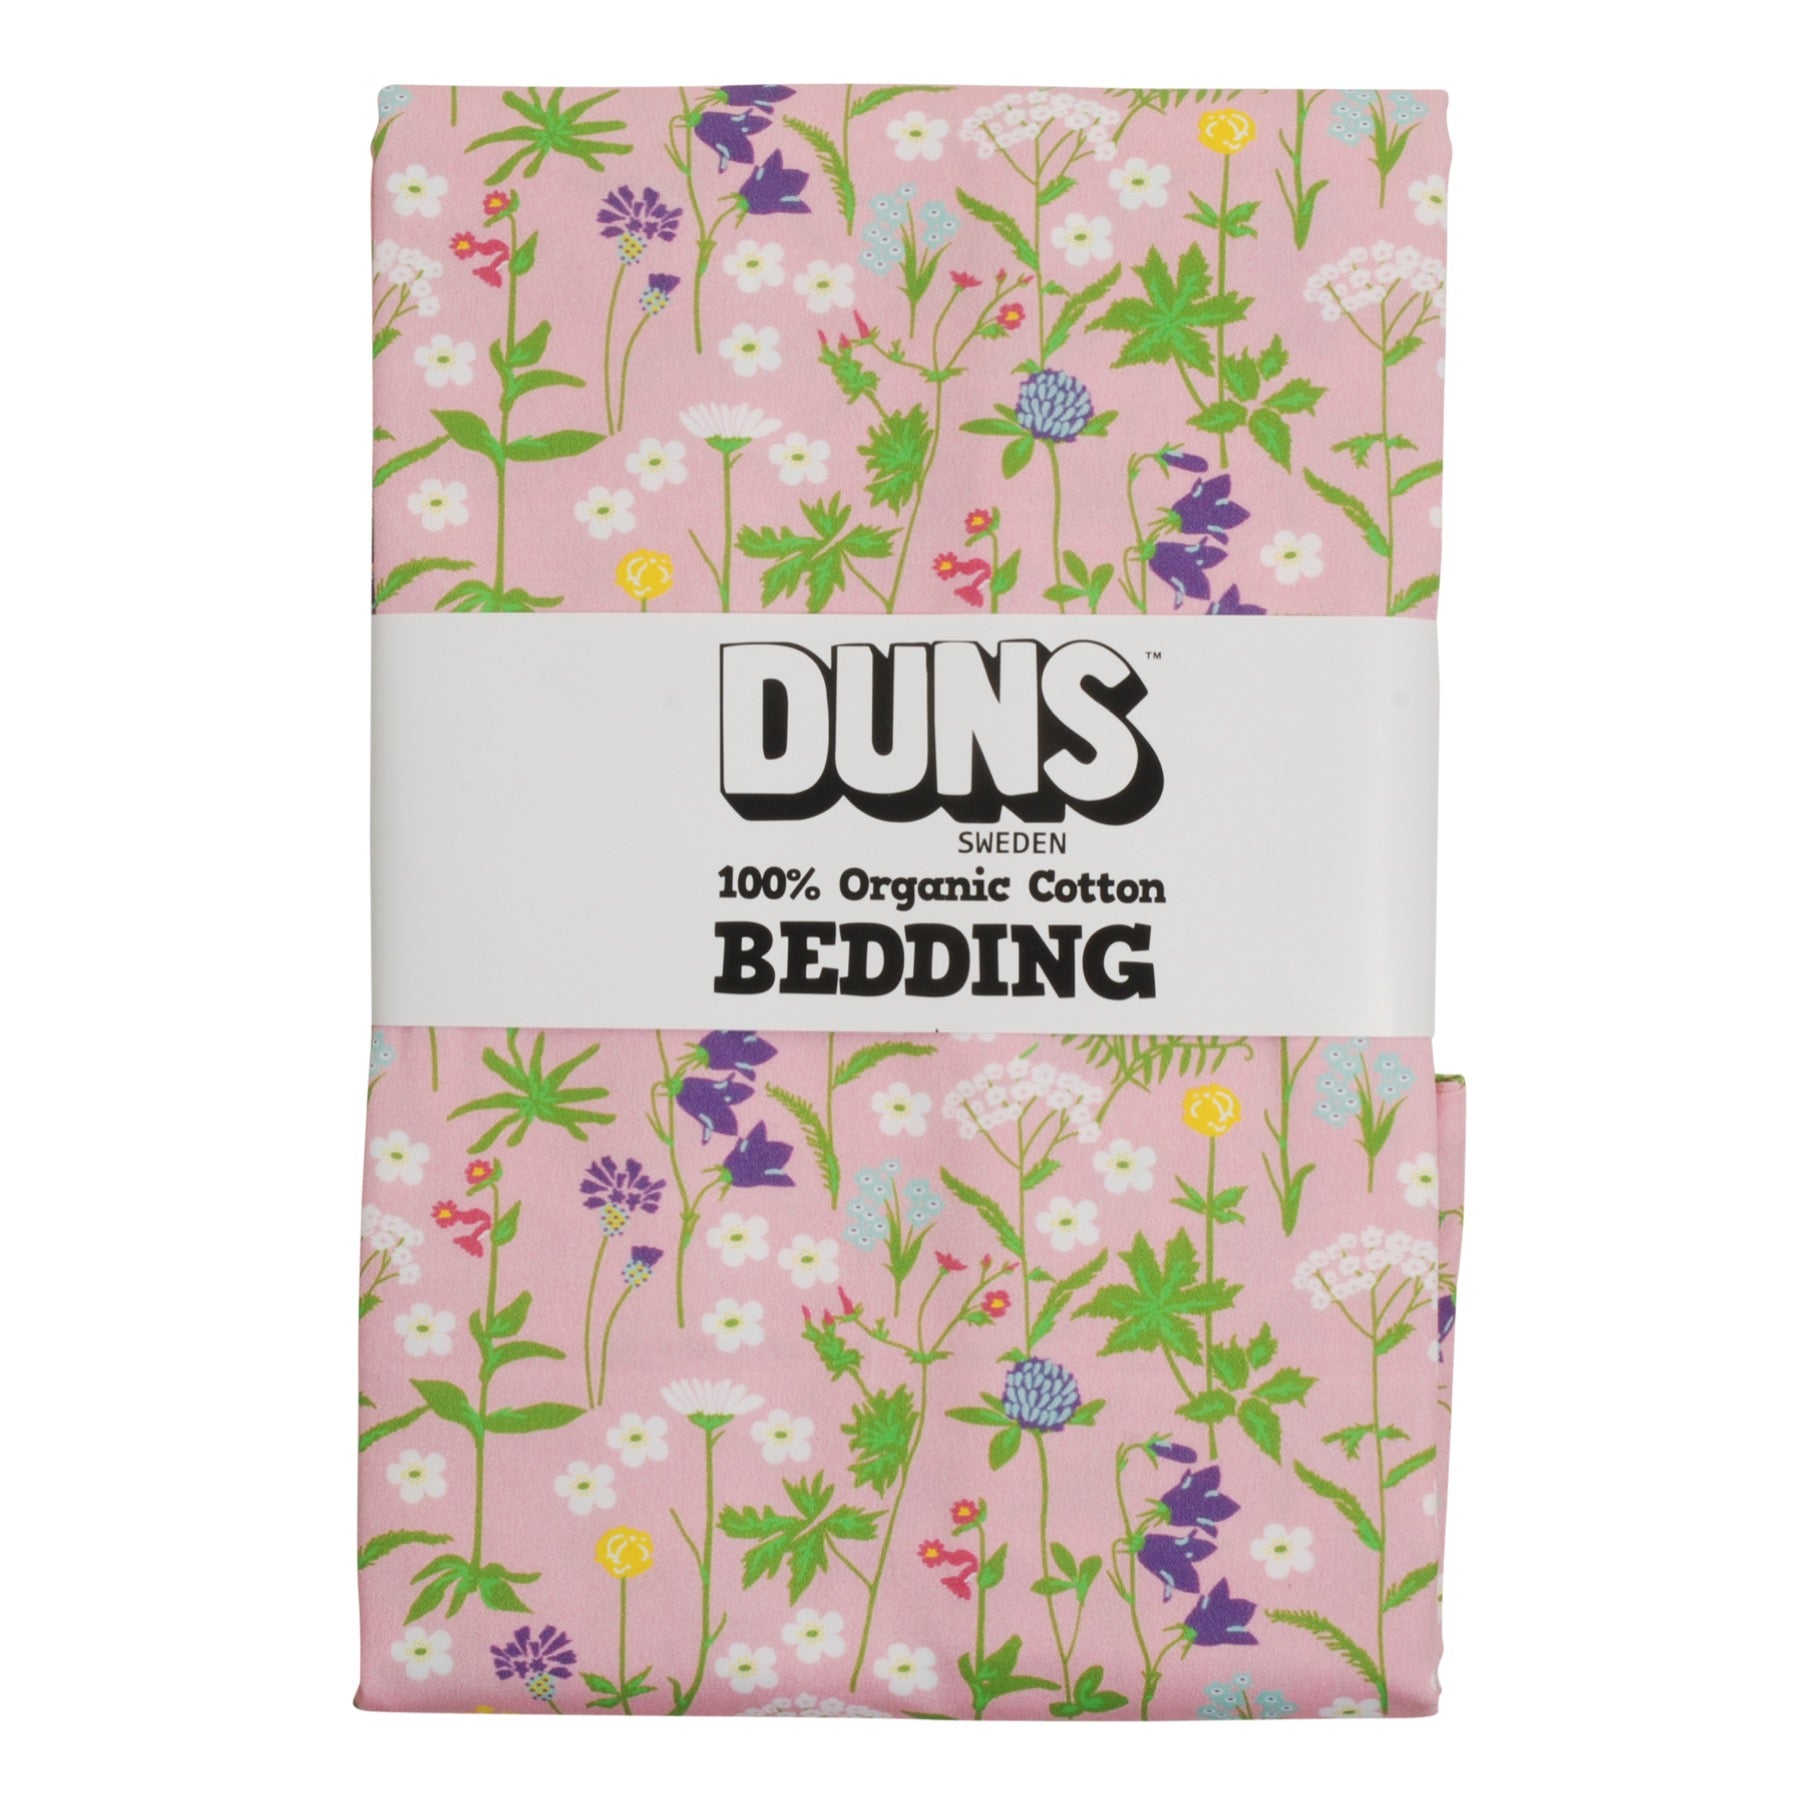 DUNS Sweden Bedding Wild Flowers Pink